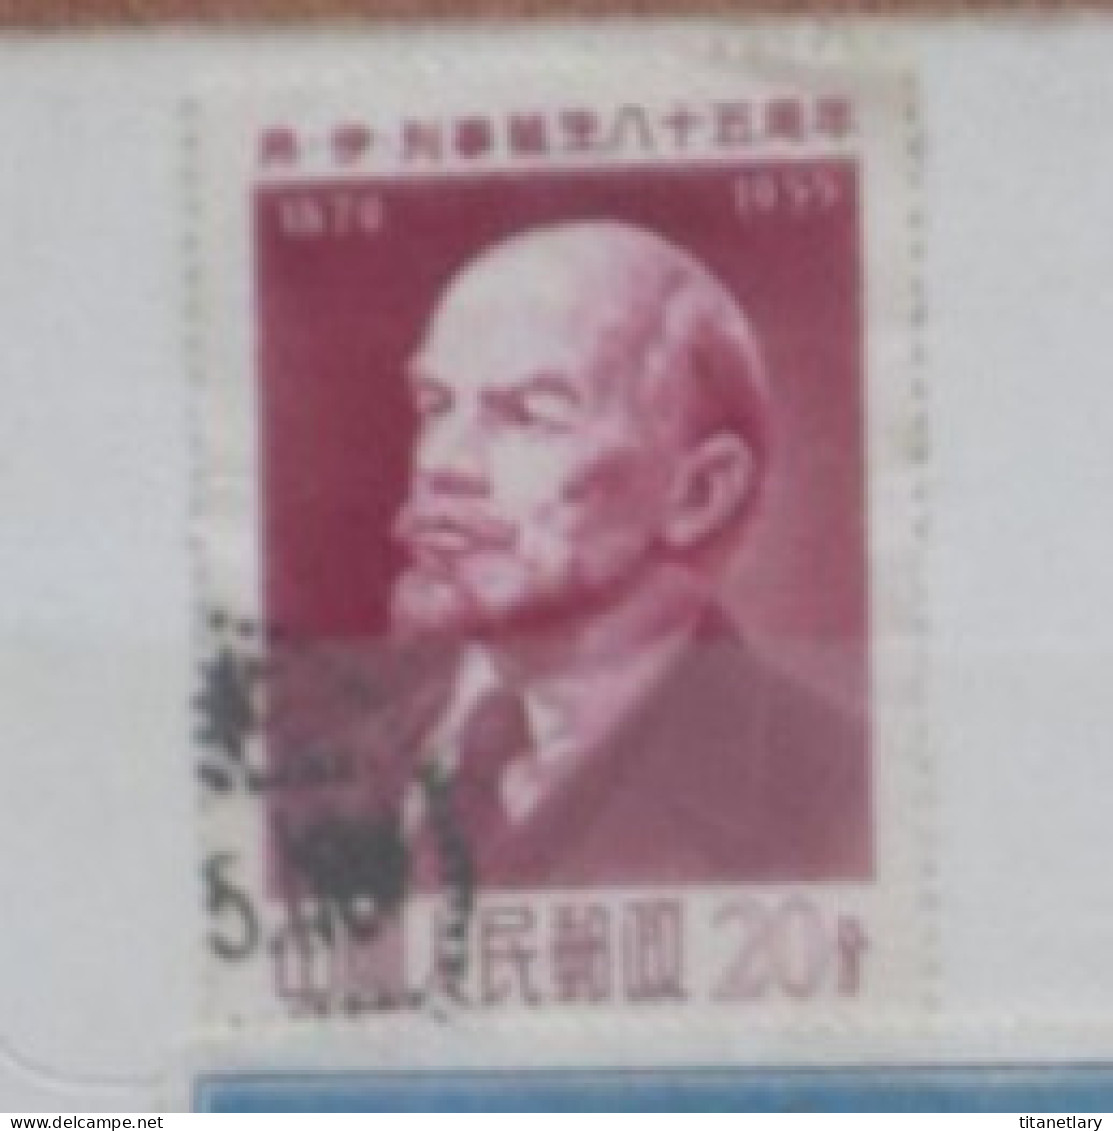 CHINE - CHINA - CHINESE - Superbe Album de 220 timbres anciens, Mao, Lénine, Série Travail - Achat immédiat